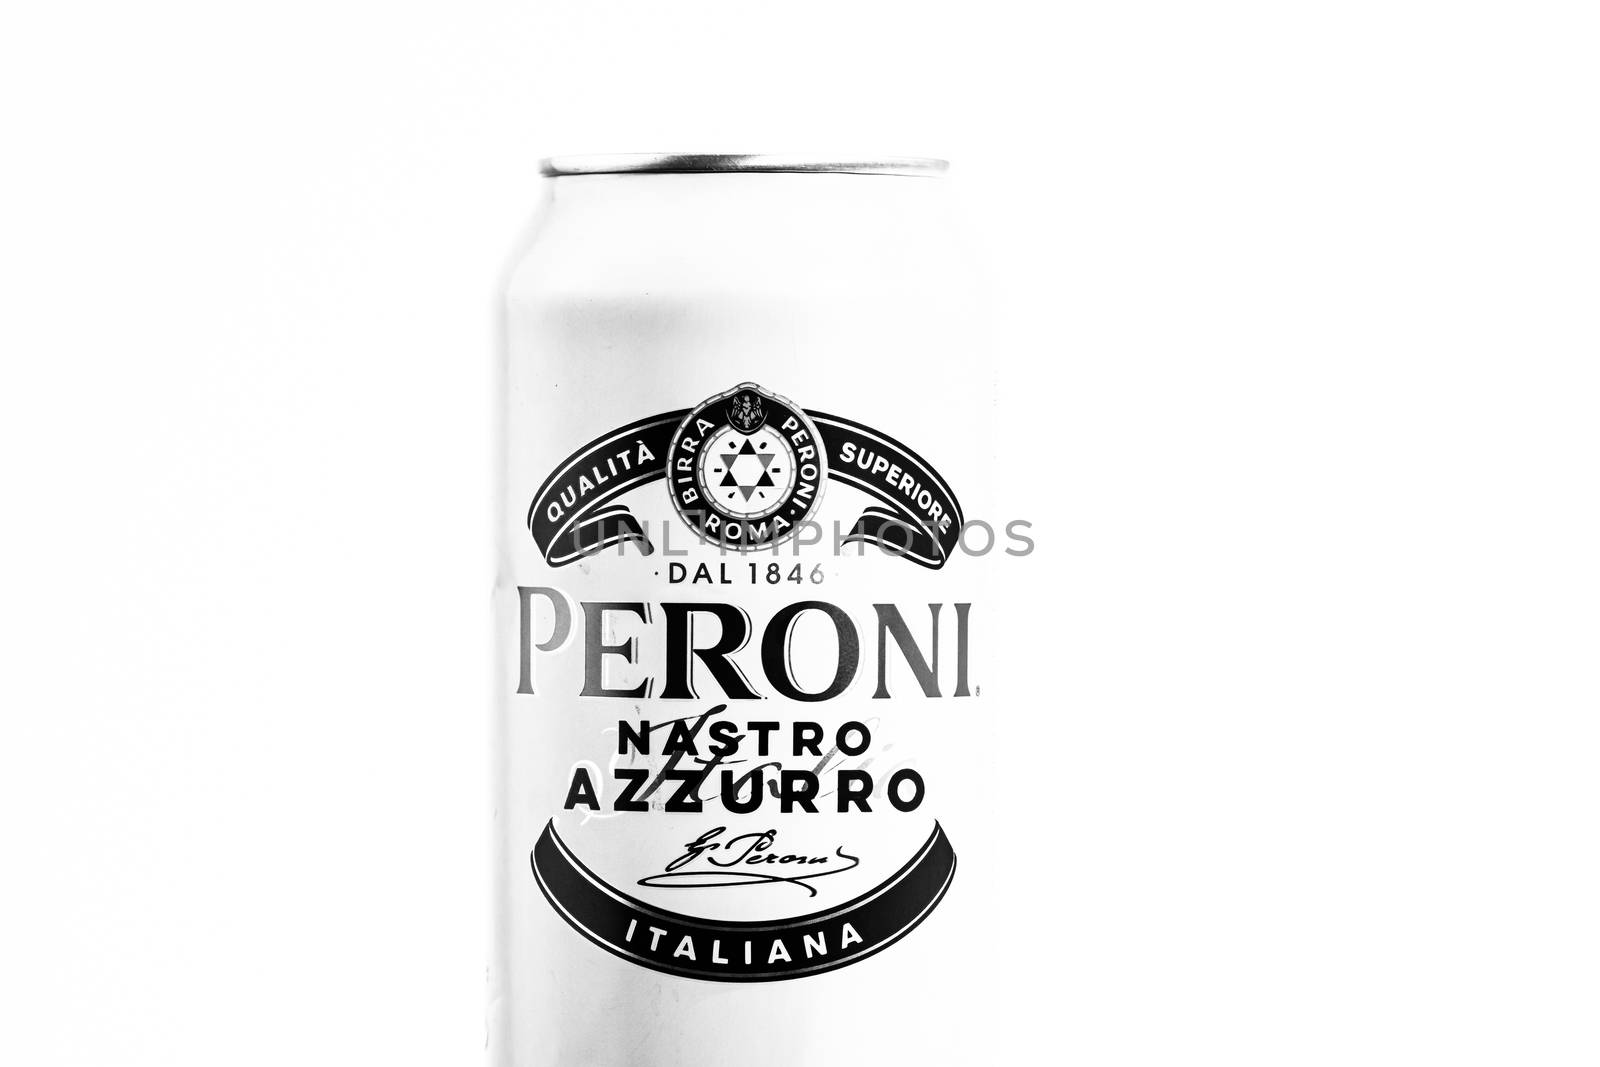 Peroni Nastro Azzurro, a premium lager beer produced since 1963  by vladispas